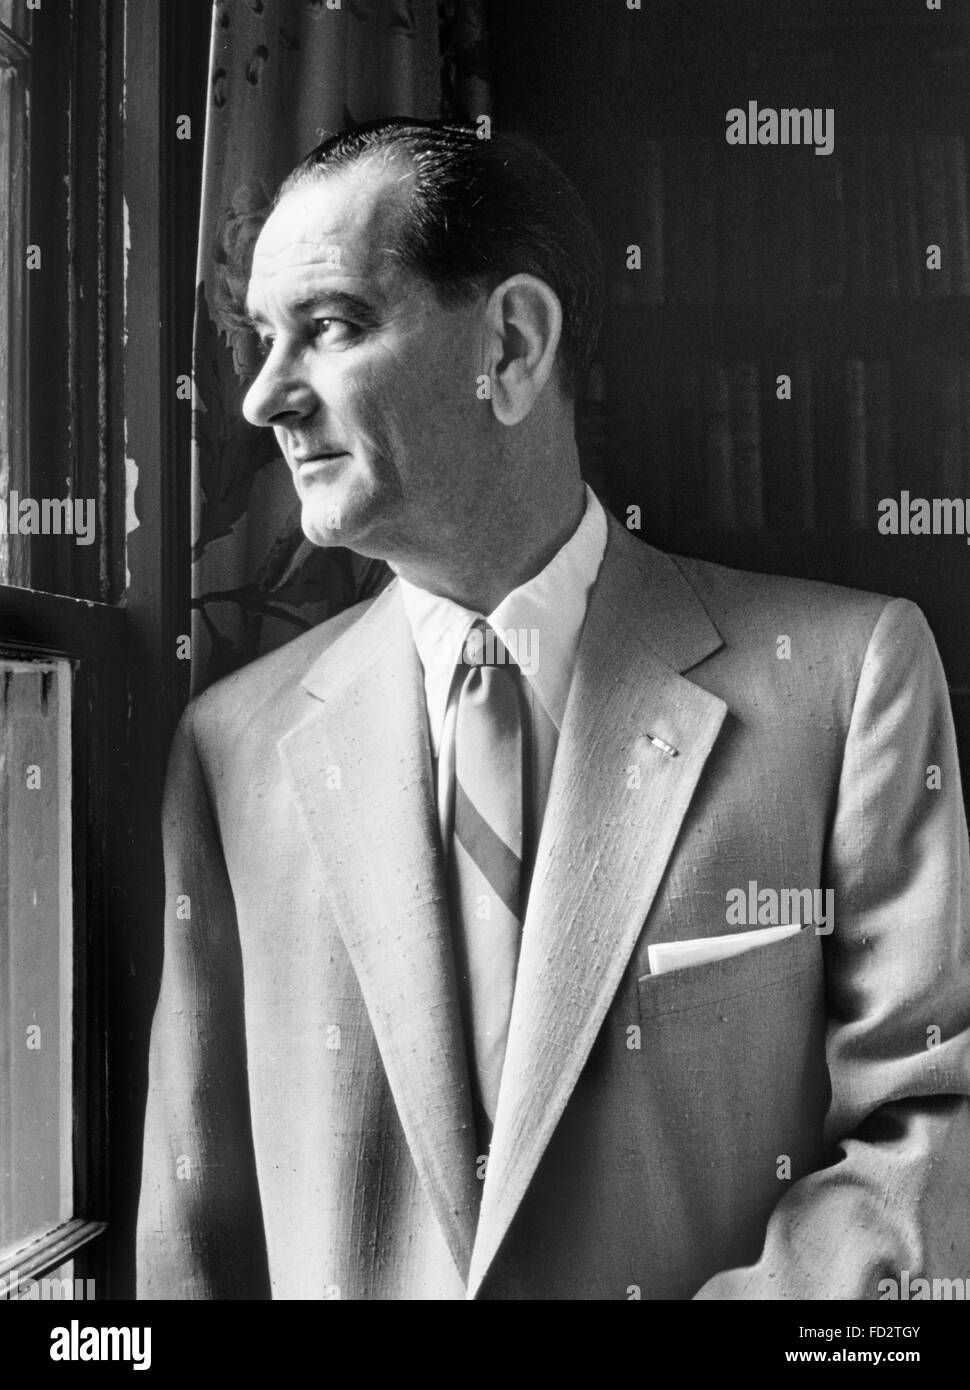 Lyndon B. Johnson, 36th President of the USA, taken when he was a senator and Senate Majority Leader, Sept 1955 Stock Photo